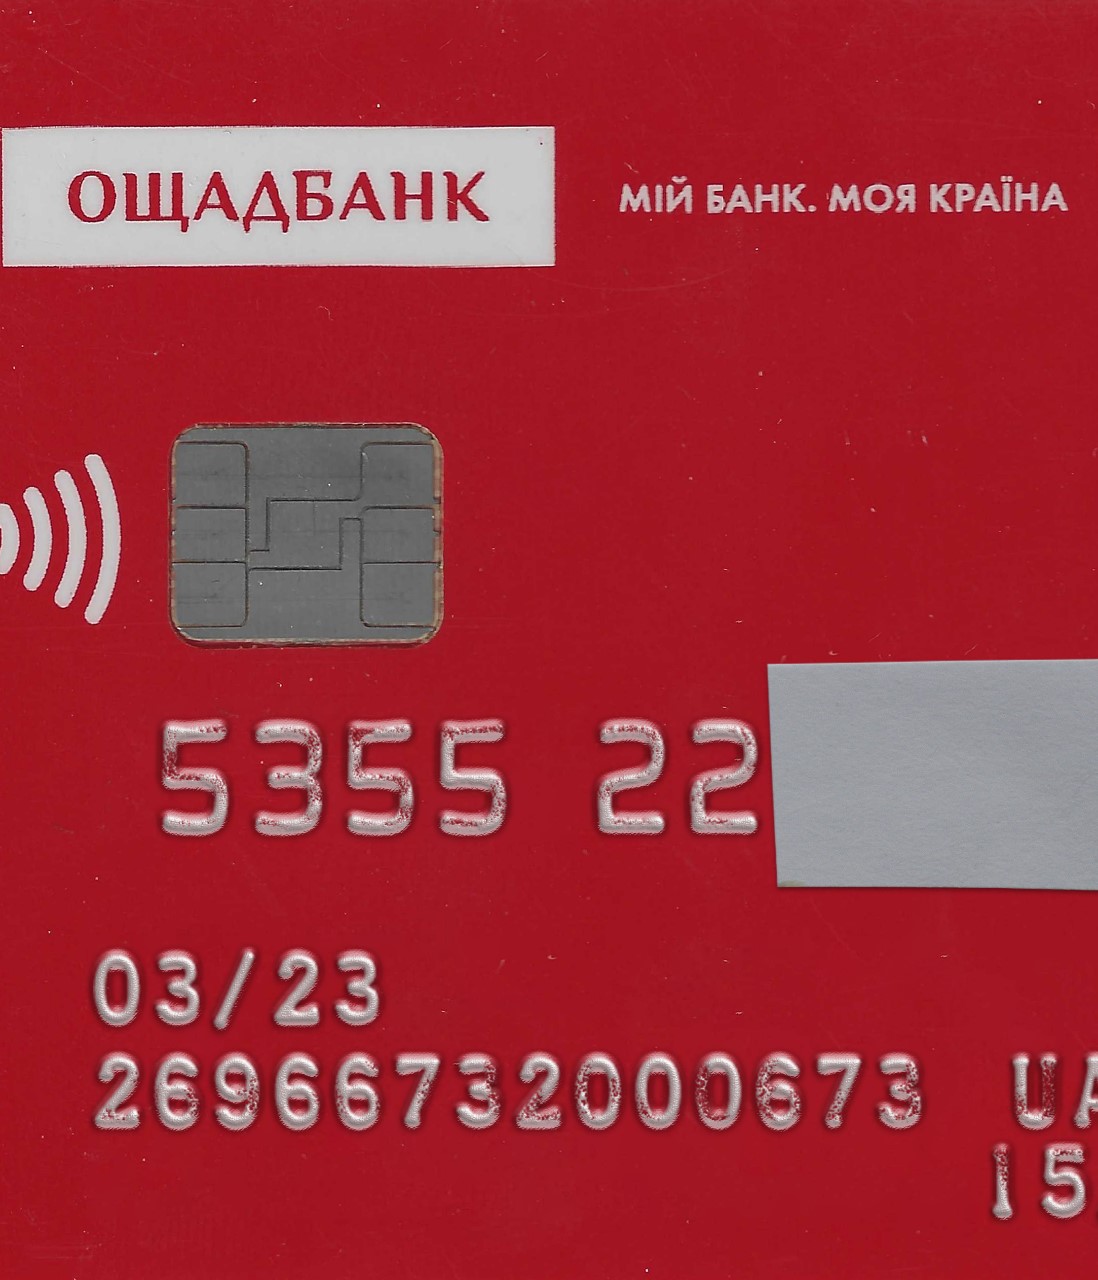 Ukraine Credit Card-2